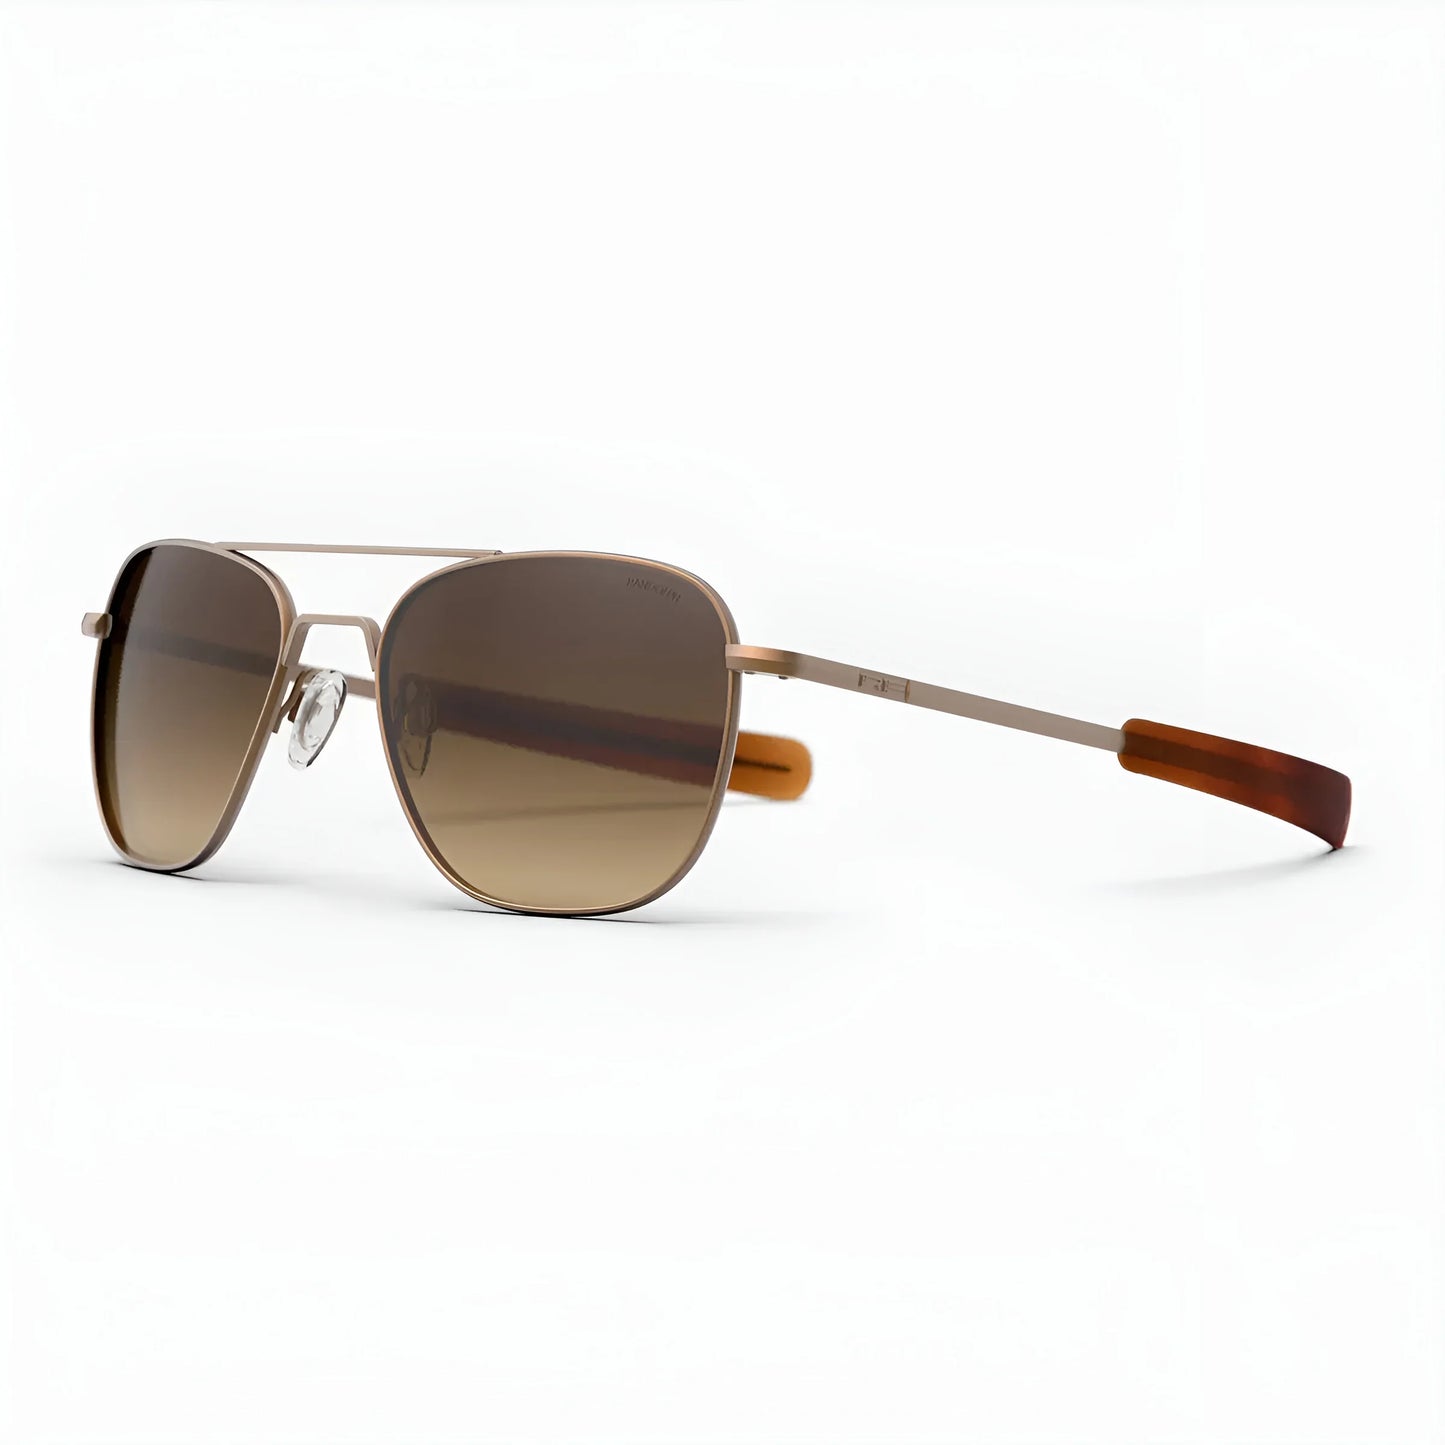 Randolph AVIATOR Sunglasses | Size 52 / 22k Satin Chocolate Gold / Cape Sand Polarized Gradient Nylon